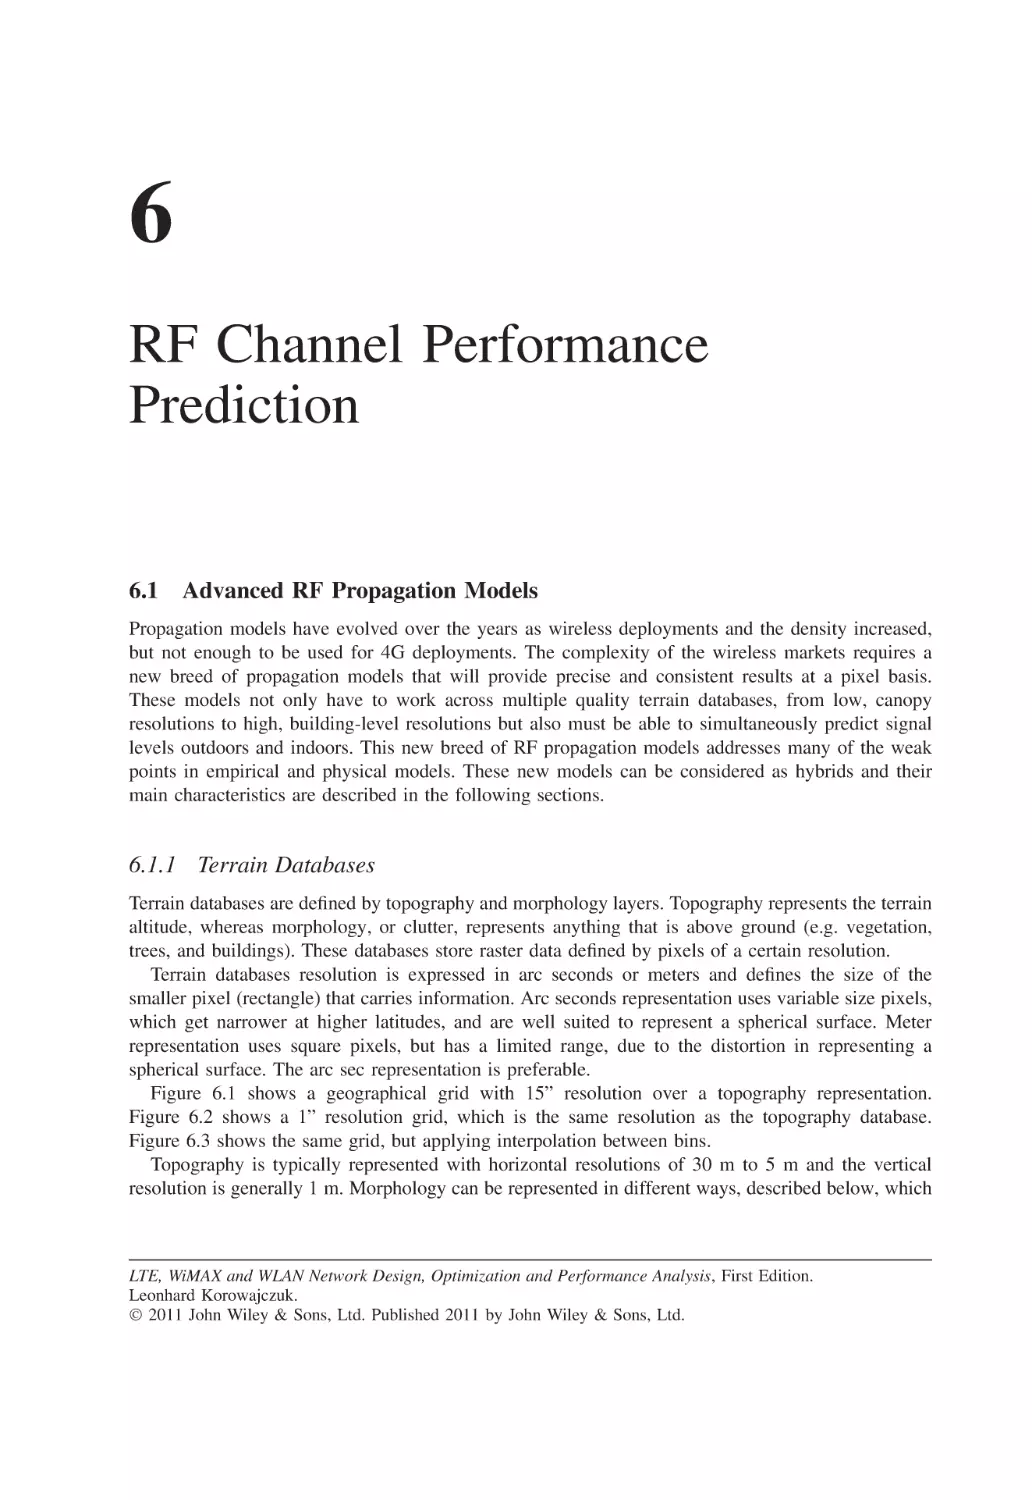 6 RF Channel Performance Prediction
6.1 Advanced RF Propagation Models
6.1.1 Terrain Databases